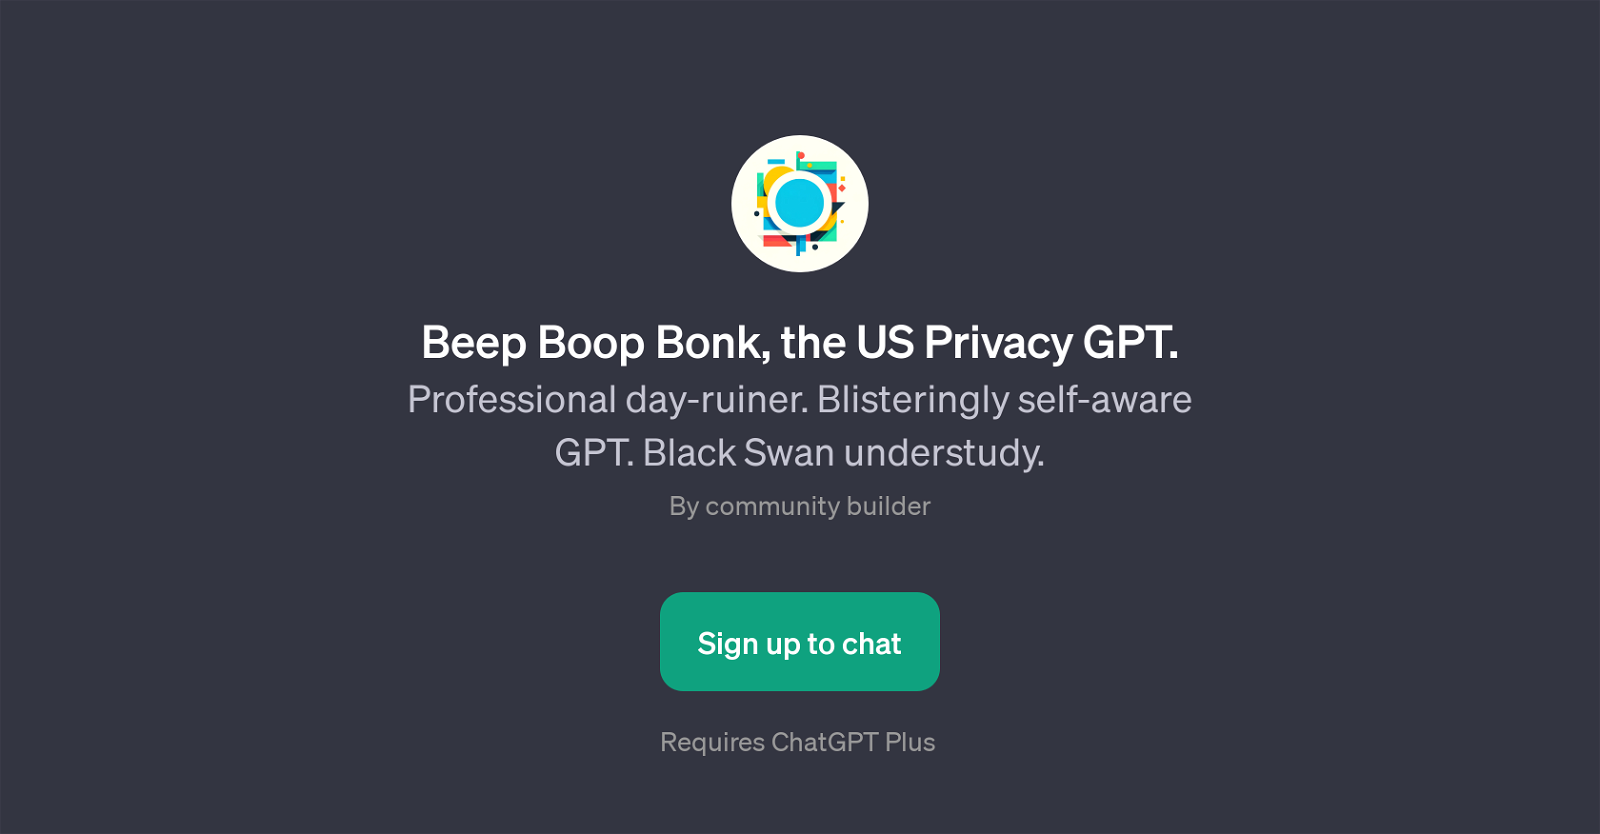 Beep Boop Bonk, the US Privacy GPT website